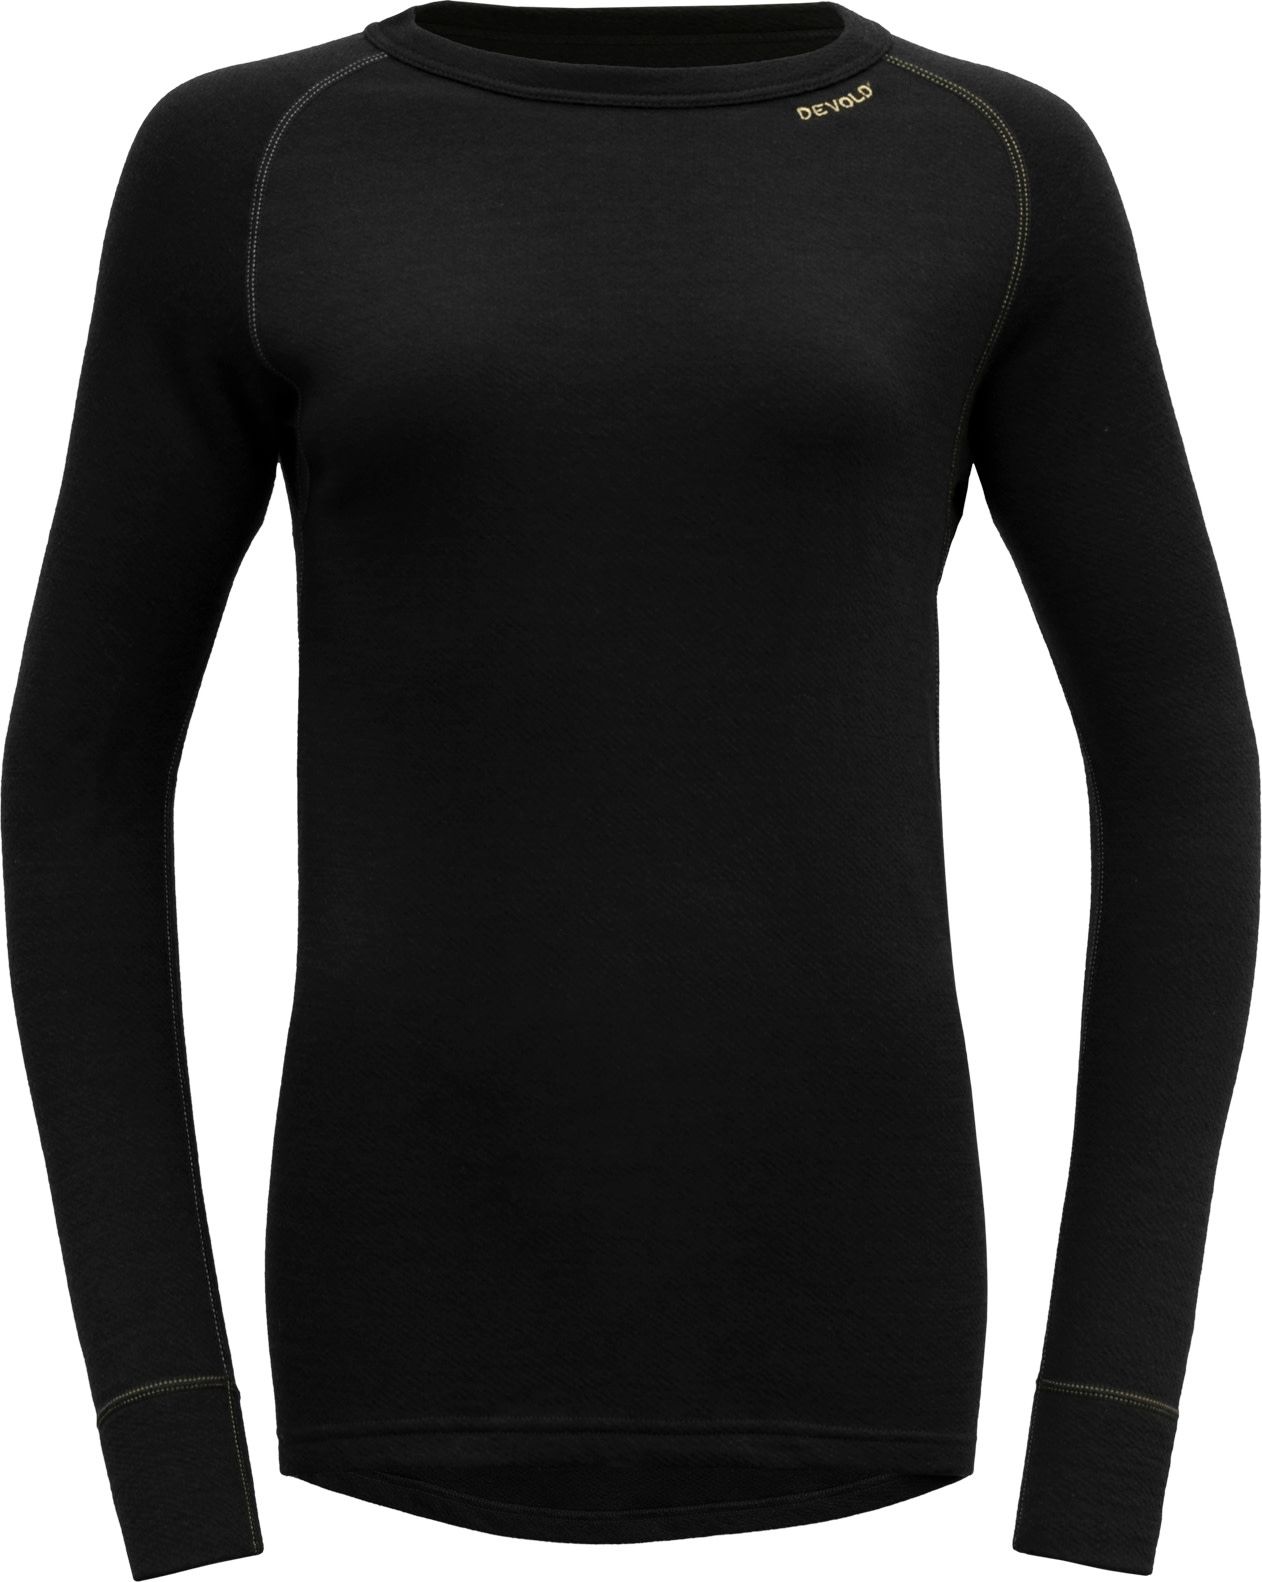 Women's Expedition Shirt BLACK